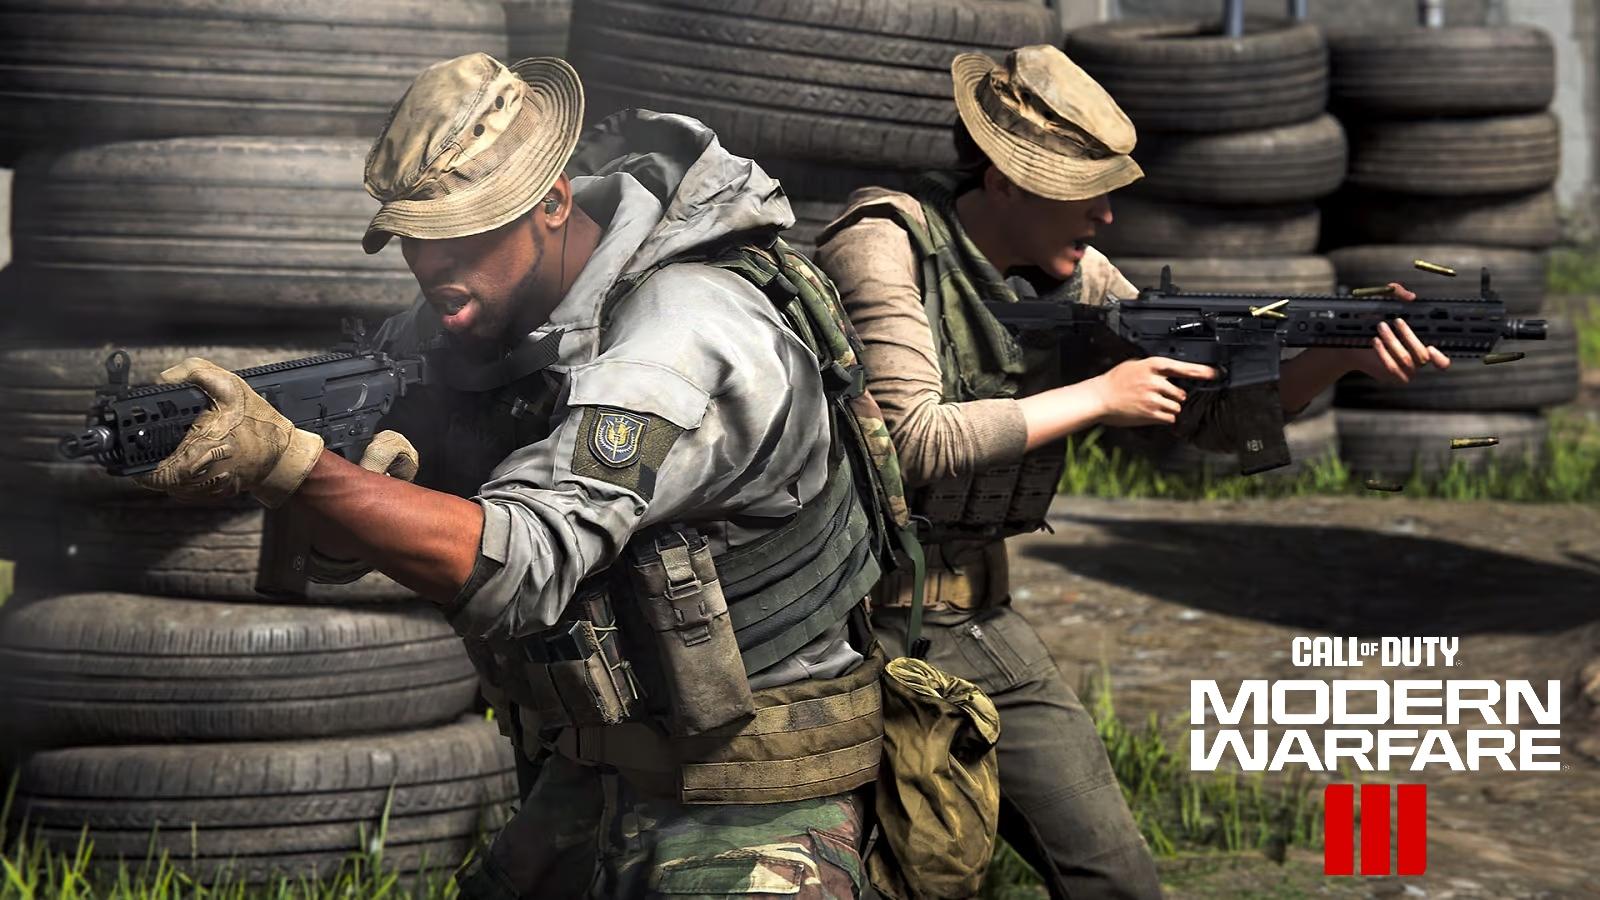 Gunfight in Modern Warfare 2019 with MW3 logo in bottom right corner